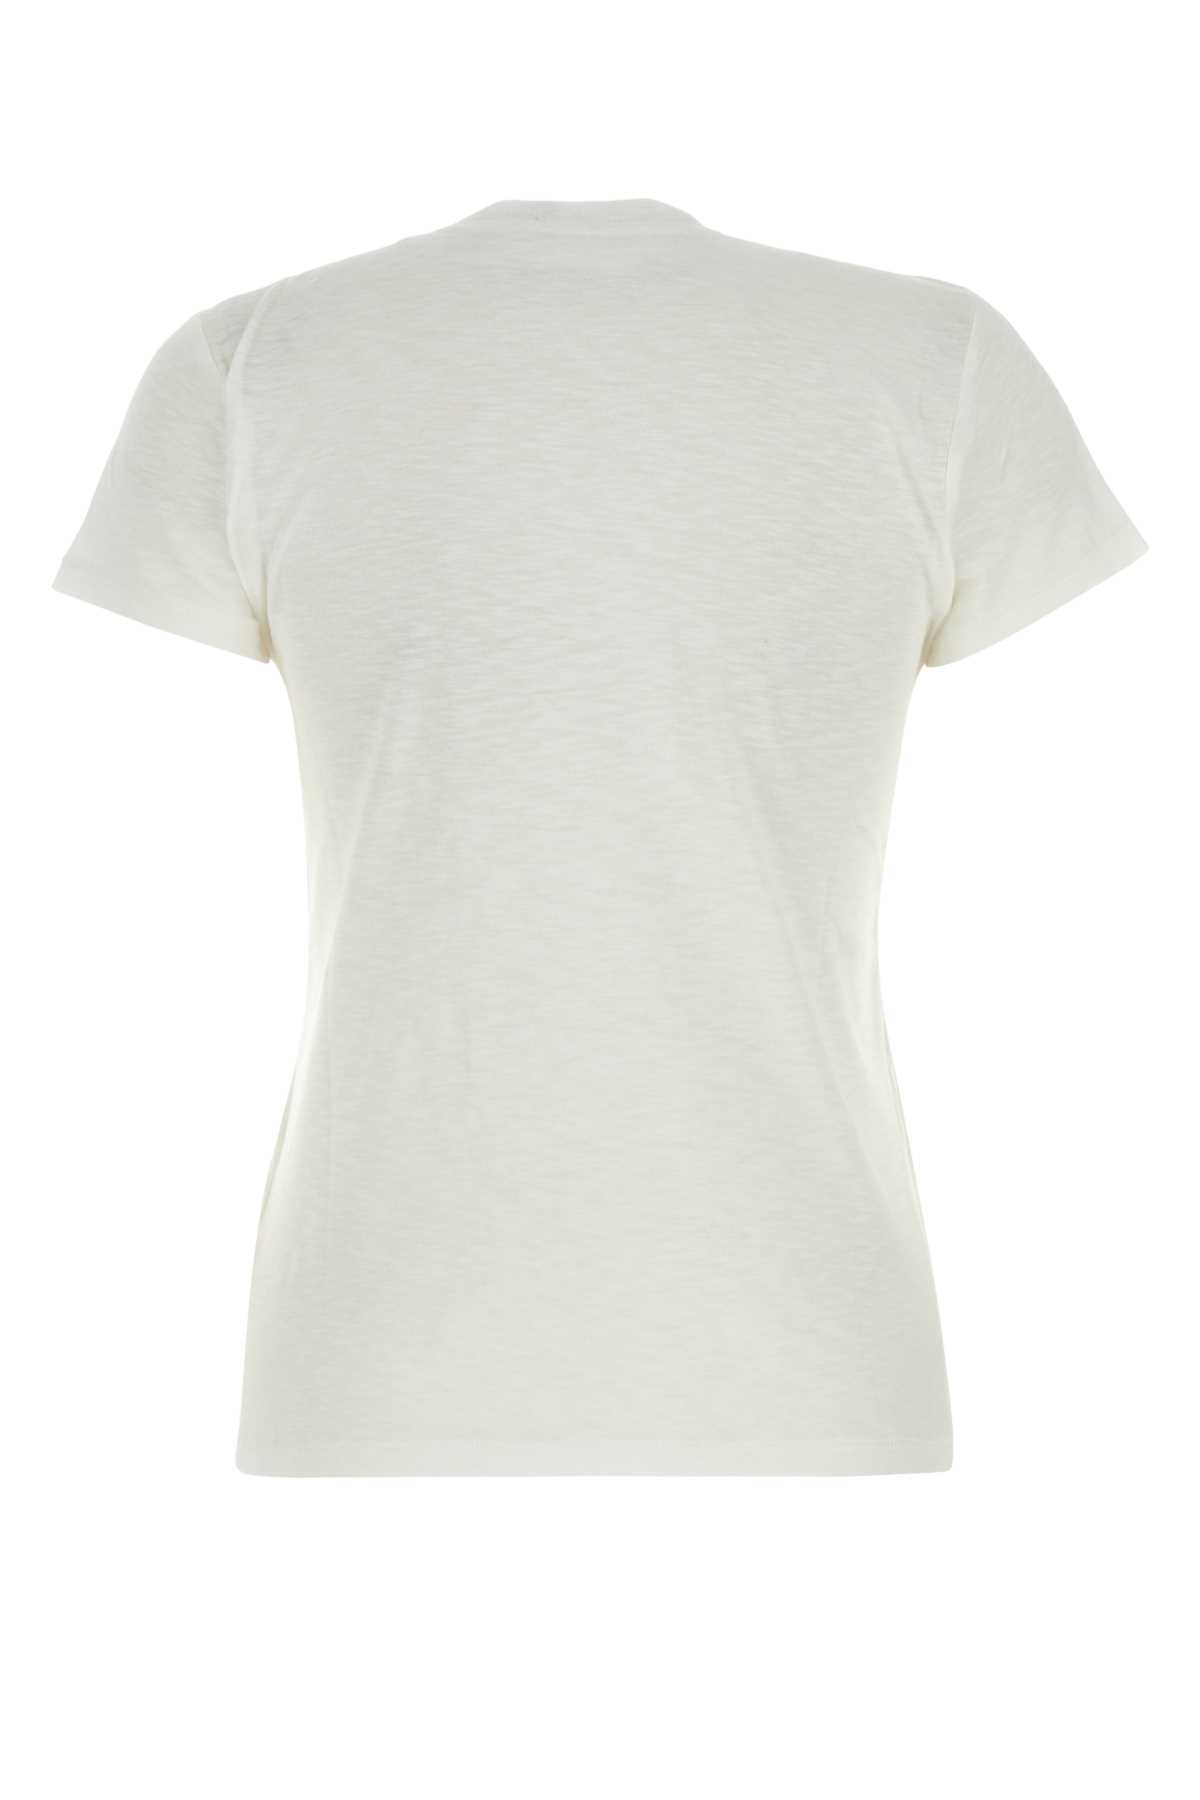 Polo Ralph Lauren White Cotton T-shirt In Nevis